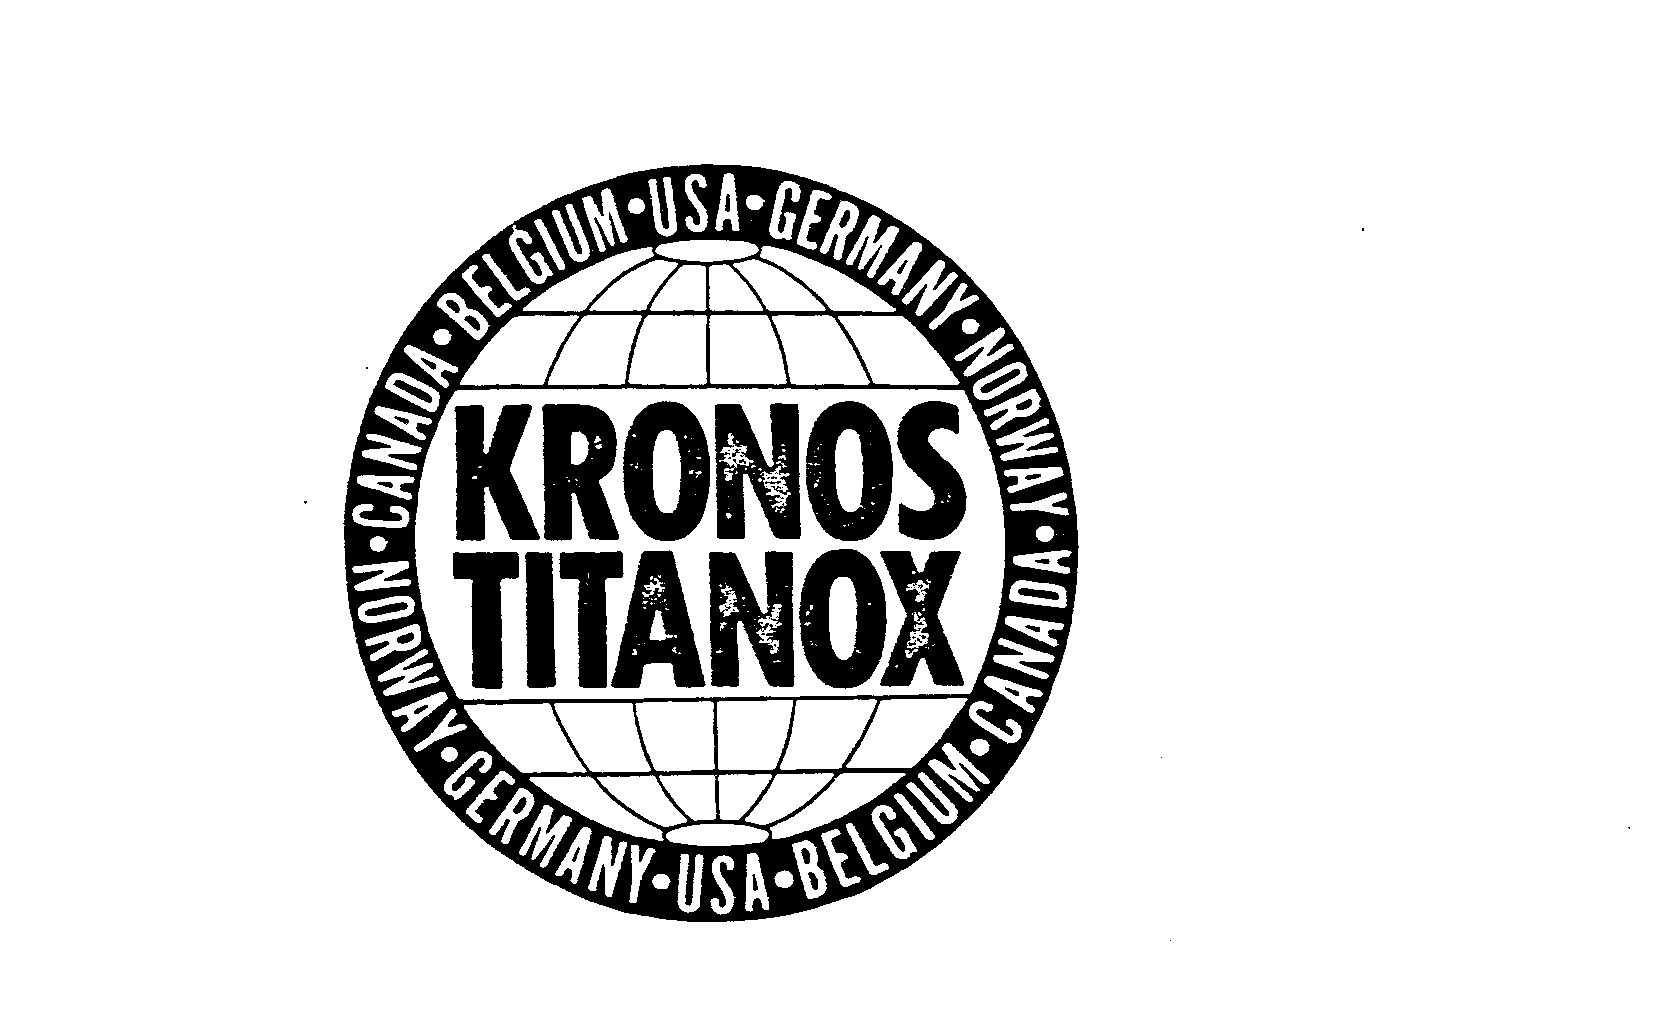  KRONOS TITANOX CANADA BELGIUM USA GERMANY NORWAY